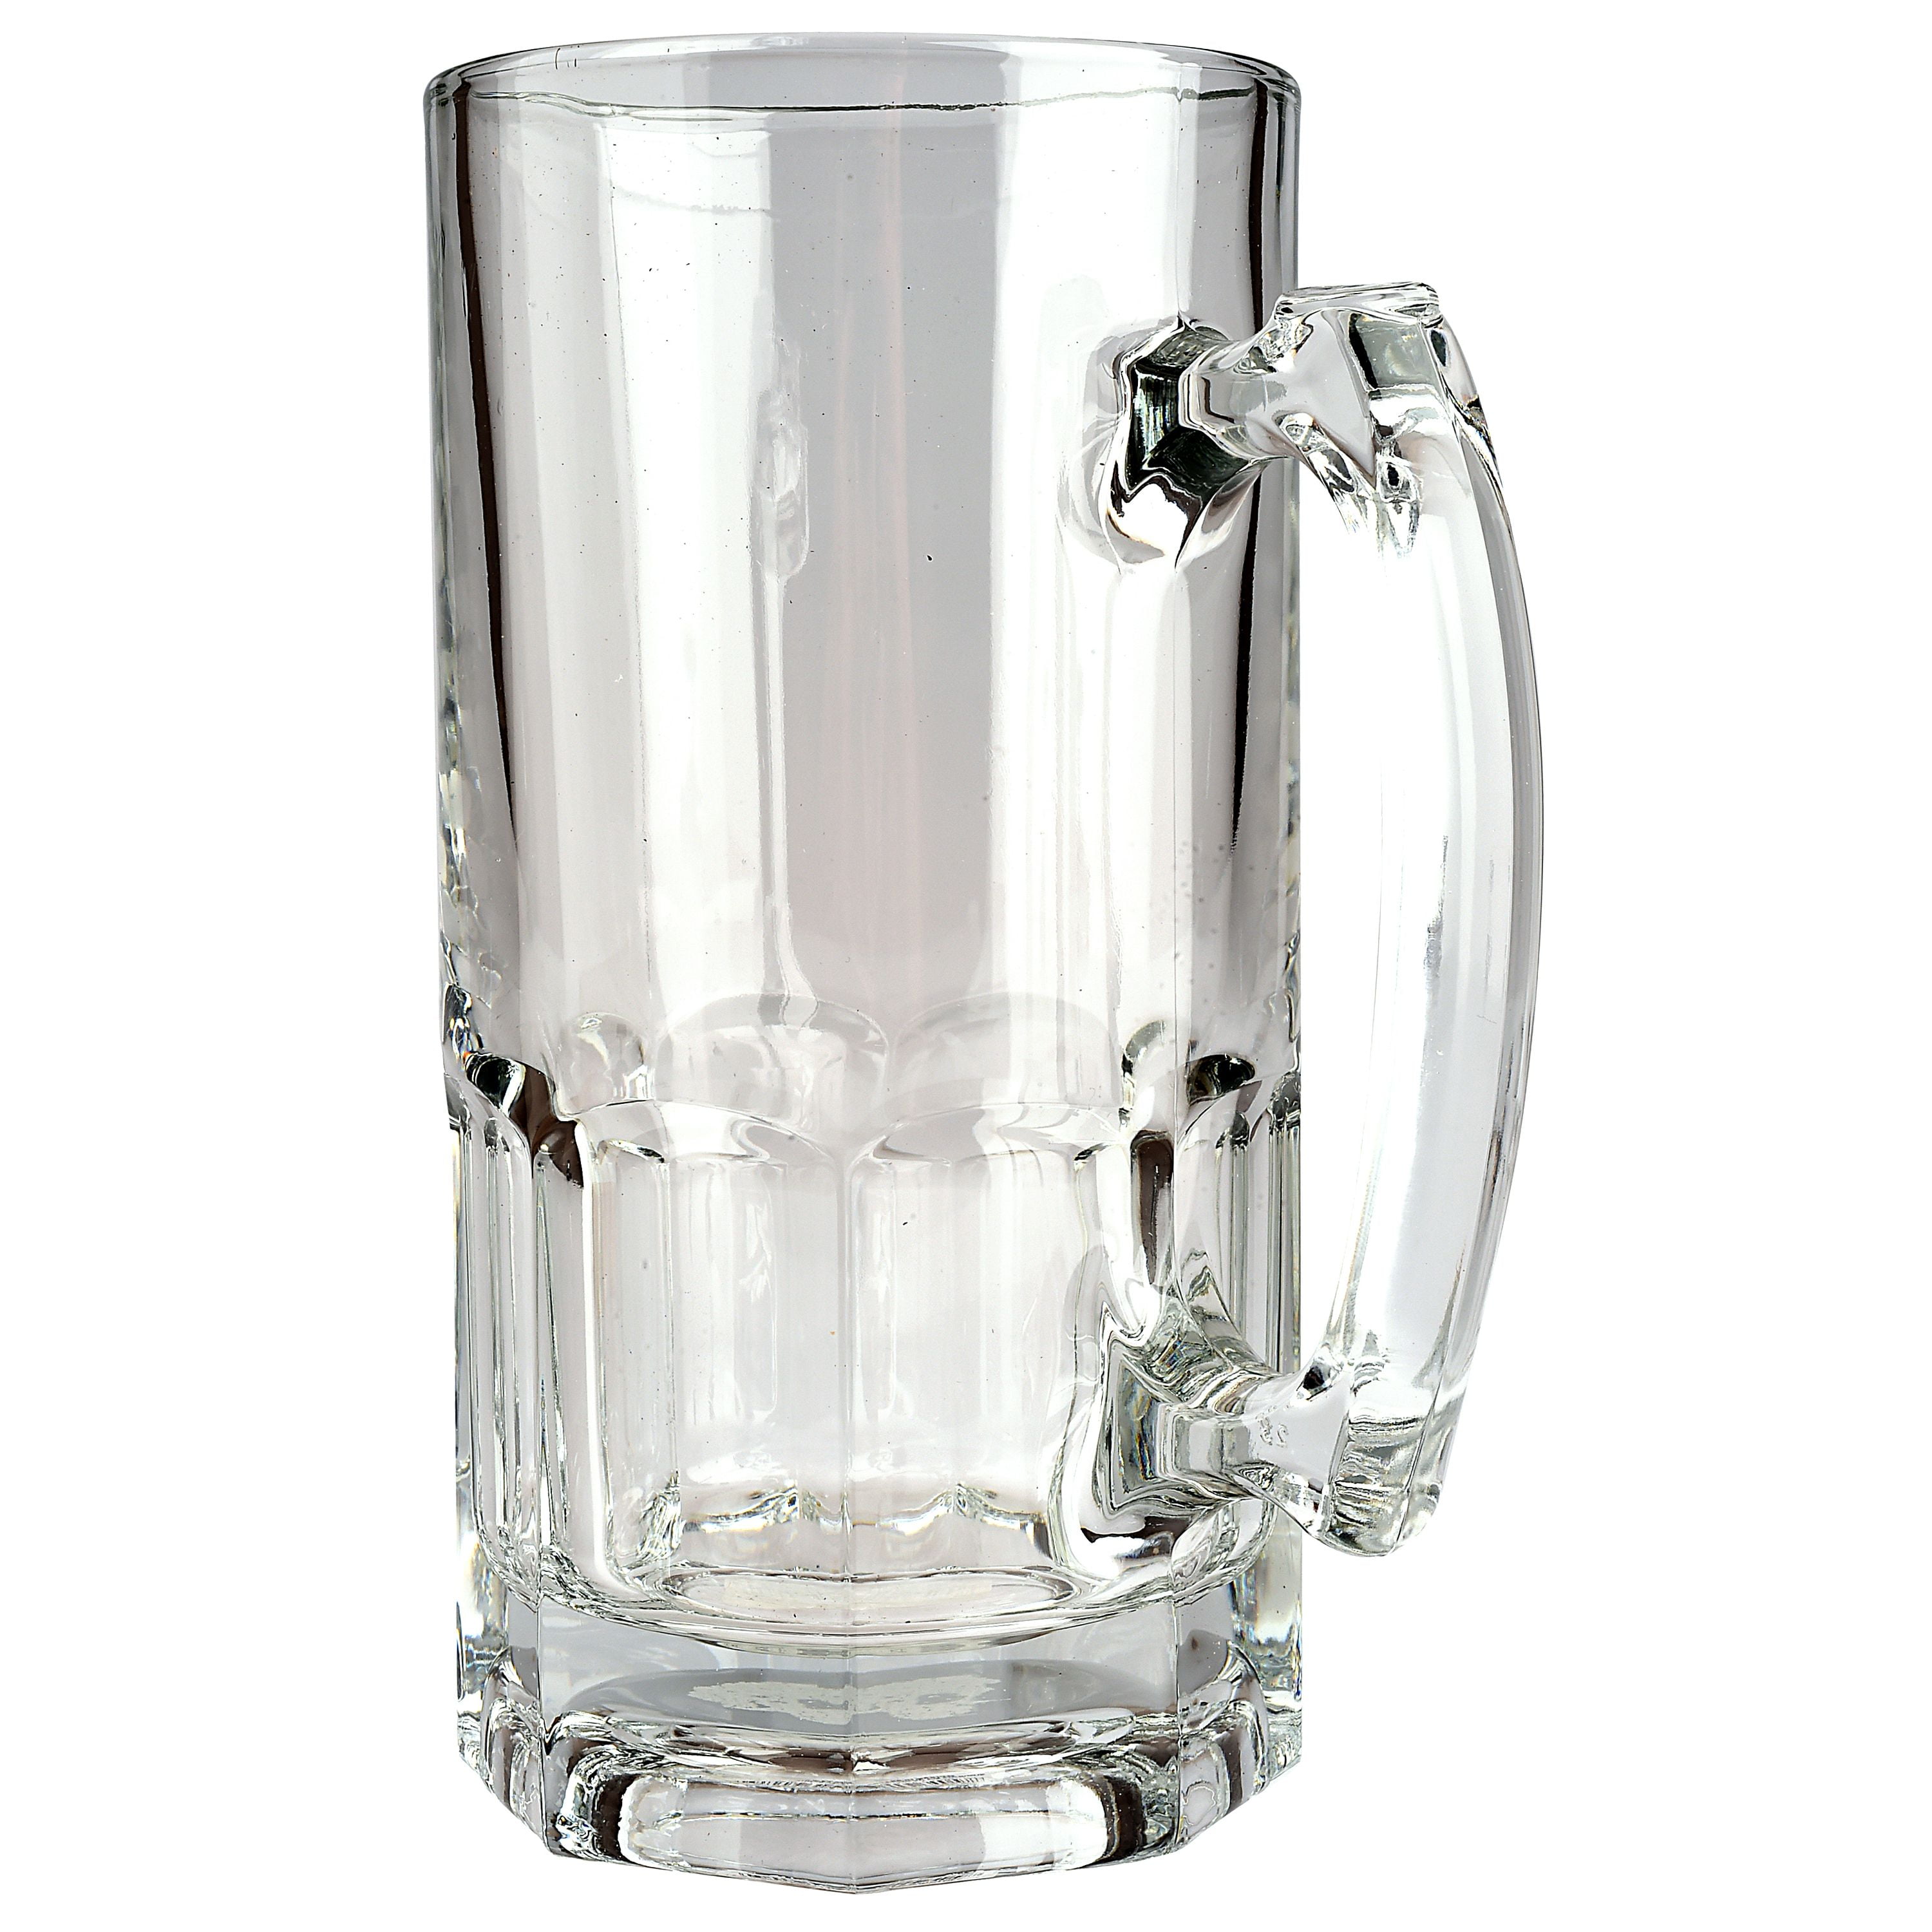 Large Glass Mug (34oz) - Sparta Pewter USA